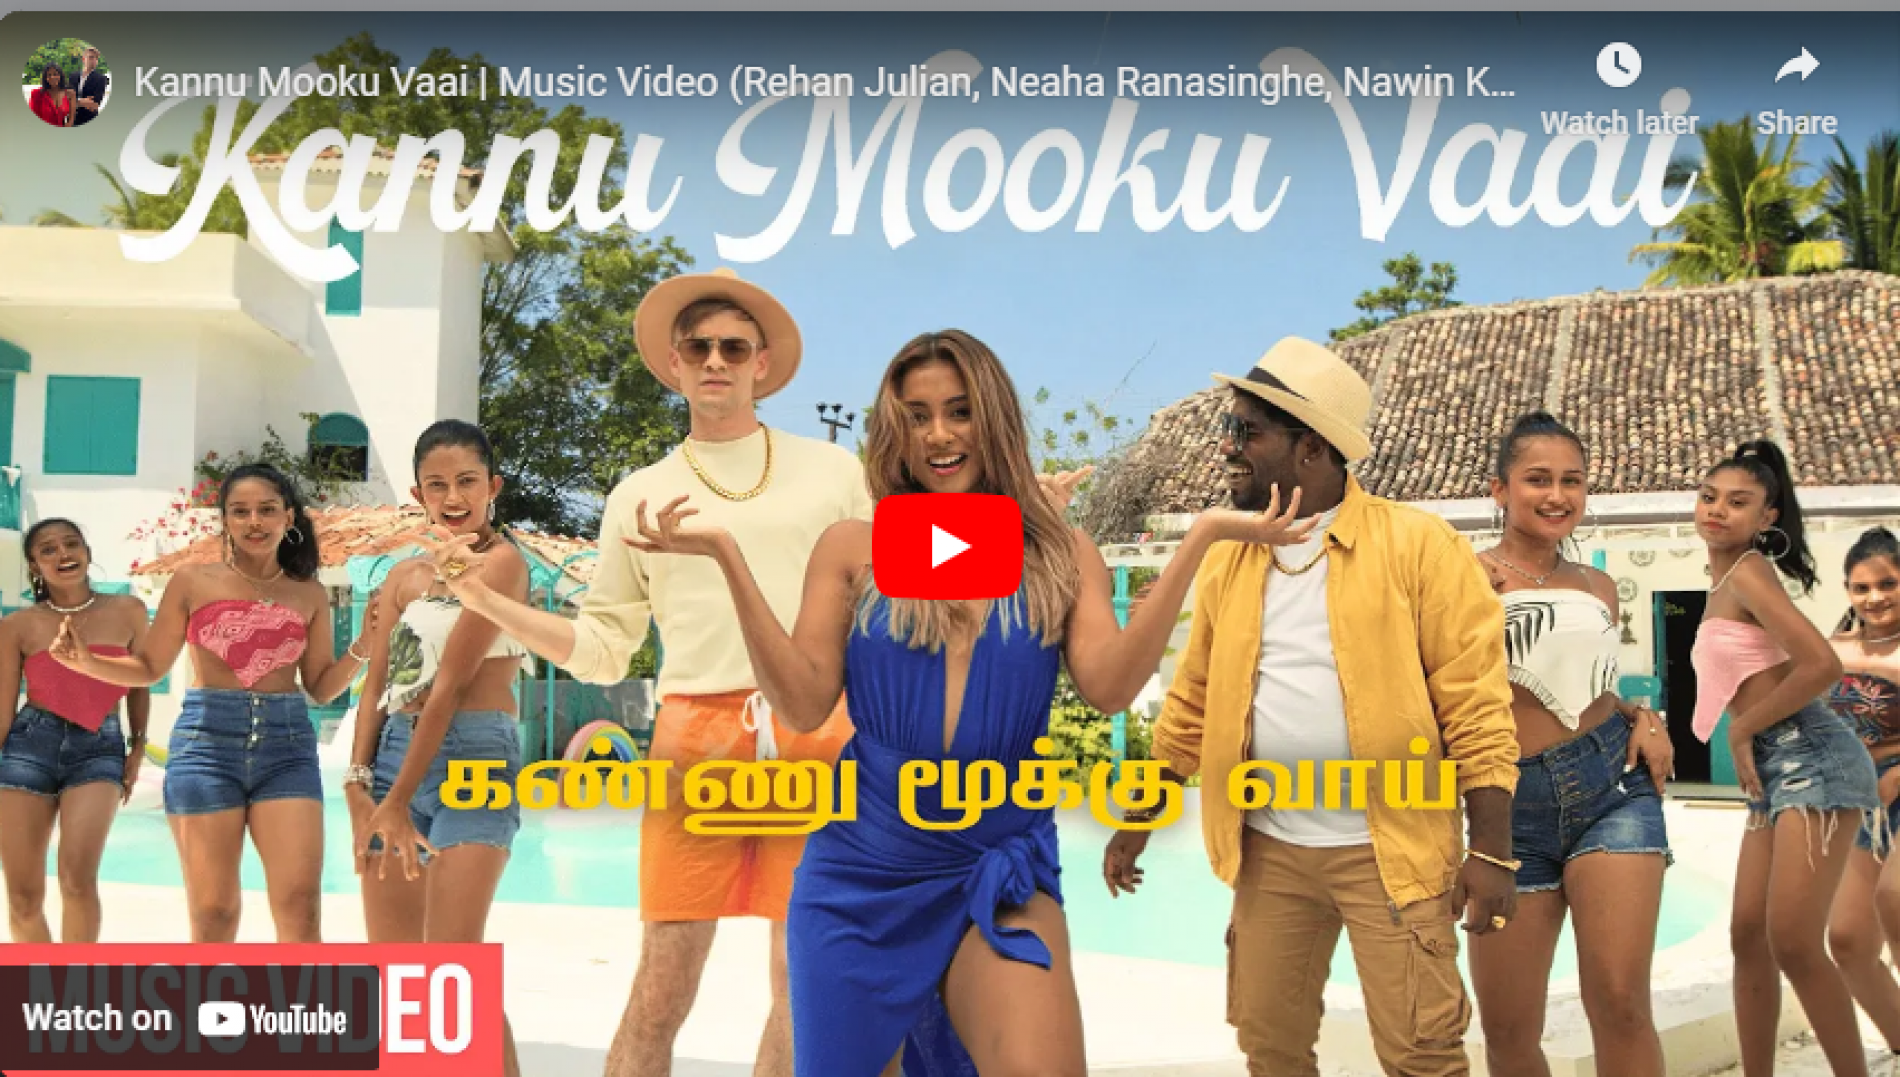 New Music : Kannu Mooku Vaai | Music Video (Rehan Julian, Neaha Ranasinghe, Nawin Kutti, Eric Heinrichs)